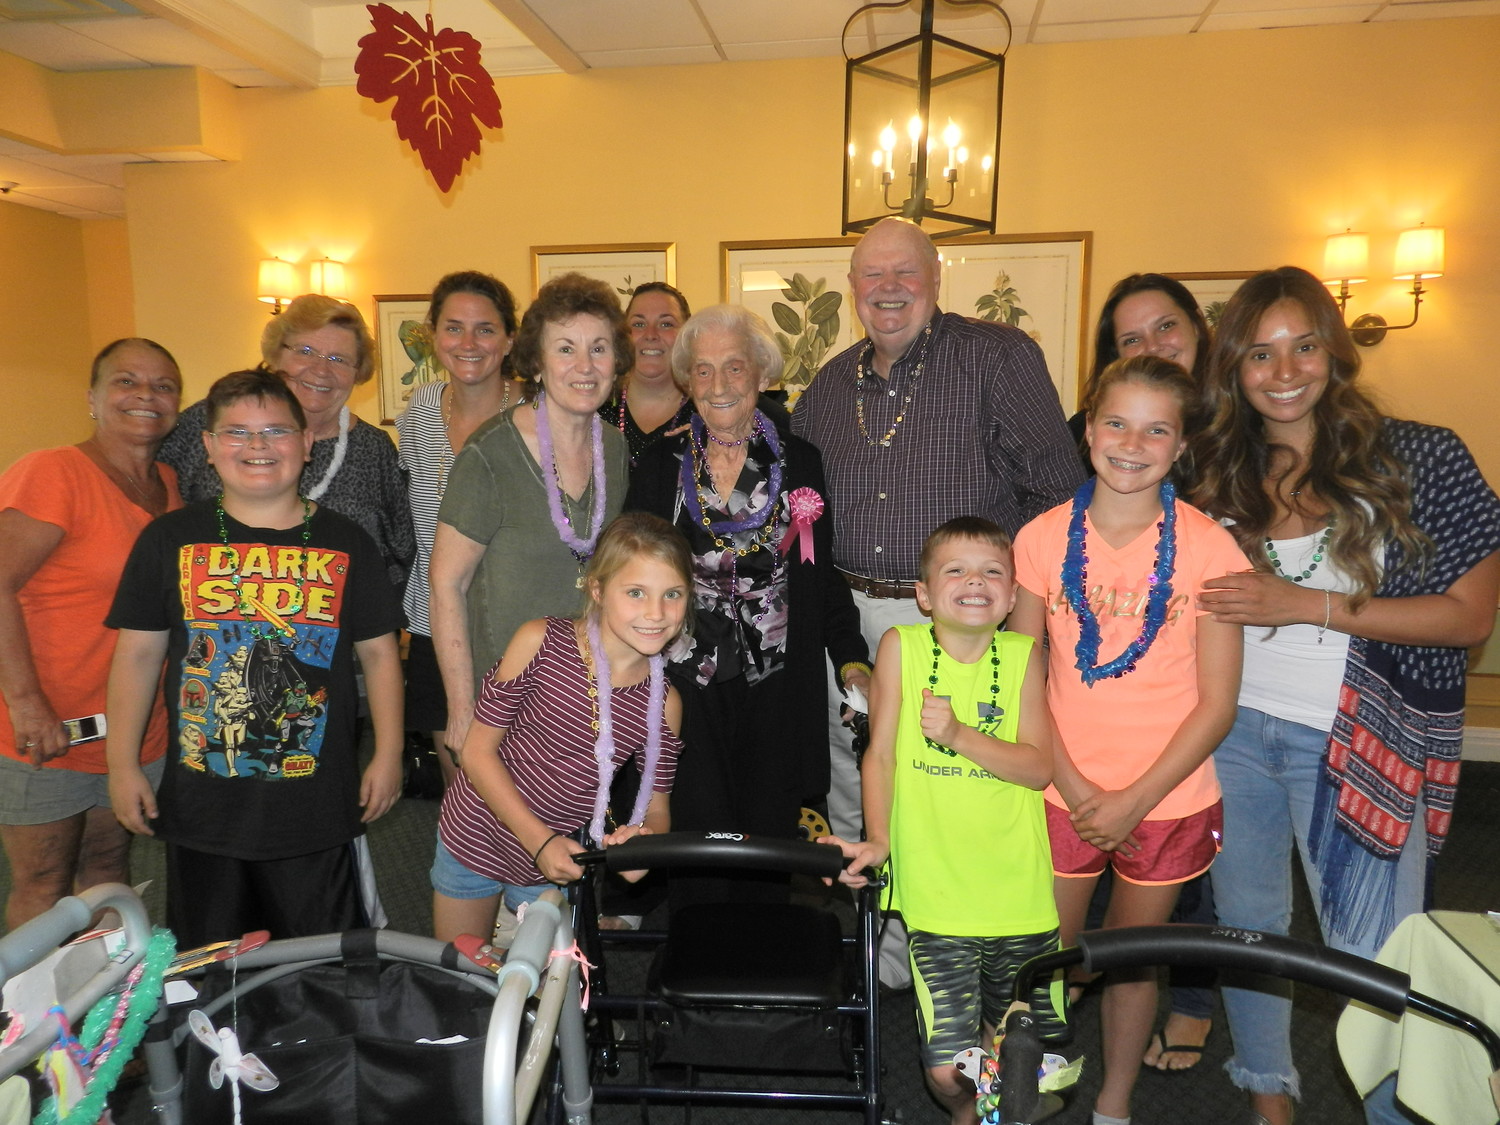 Alyssa Seidman/Herald
Joe Fennessy and his family celebrated their matriarch’s 101st birthday on Sept. 19.